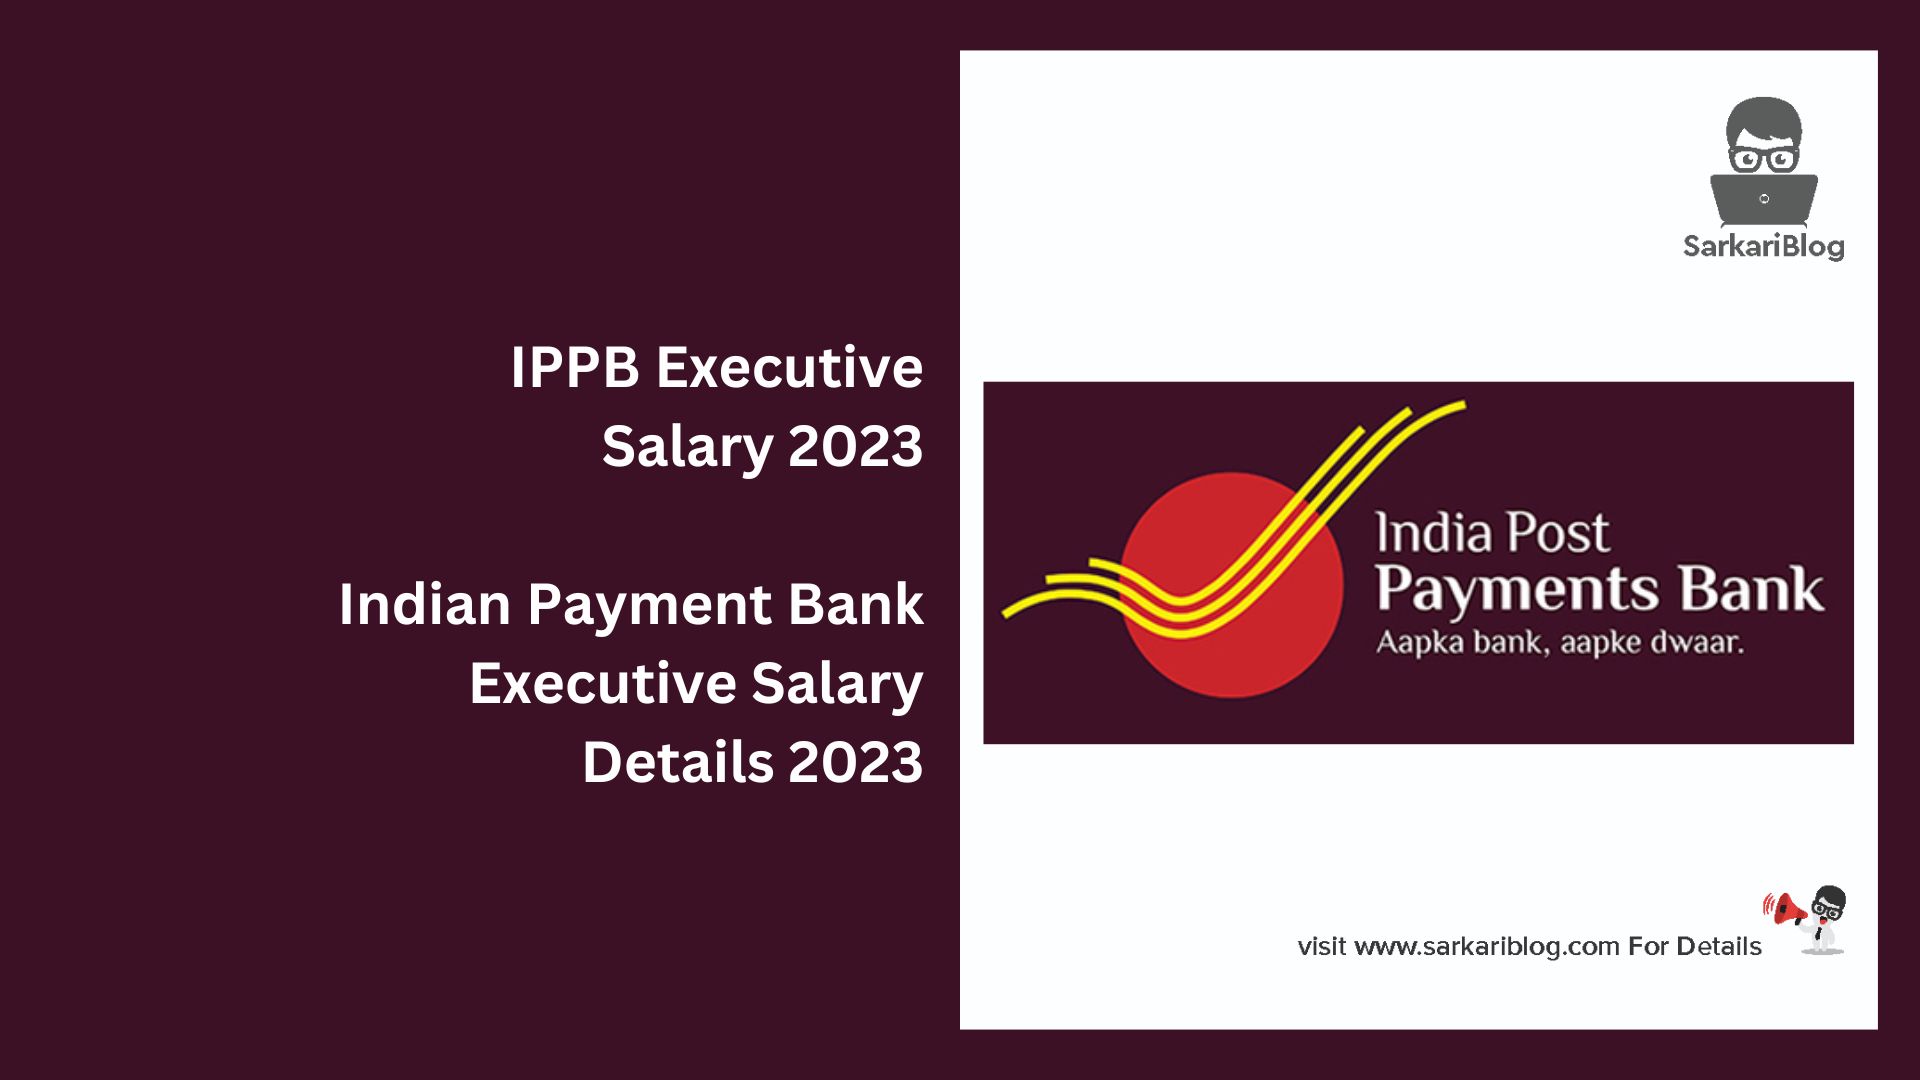 IPPB Executive Salary 2023